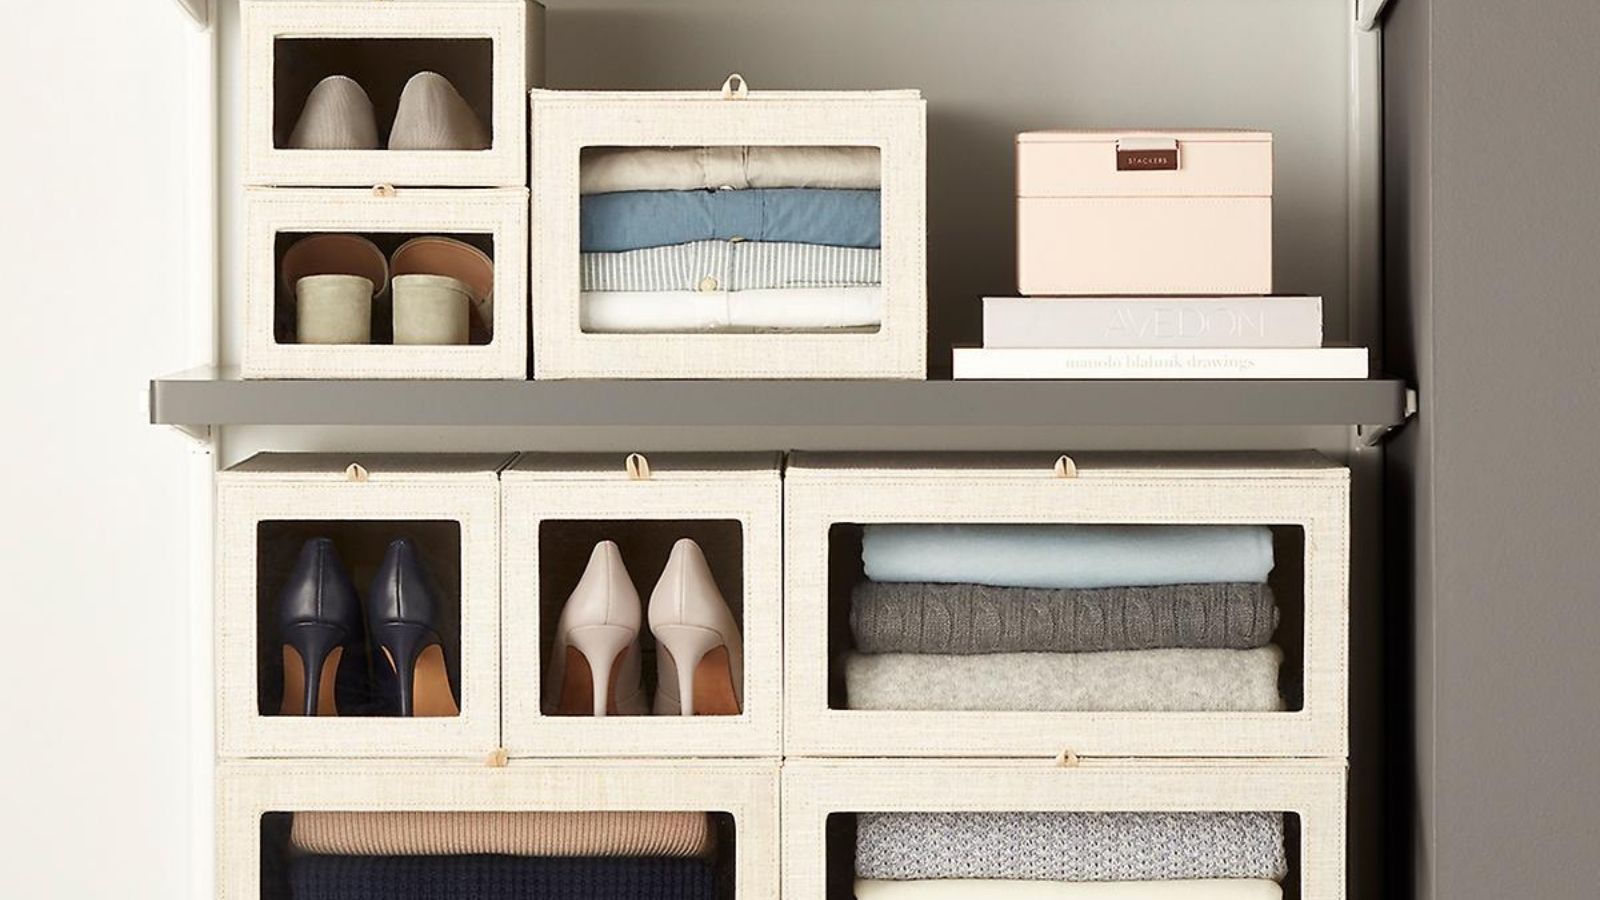 Closet organizers – 7 ways to showcase outfits and maximize storage